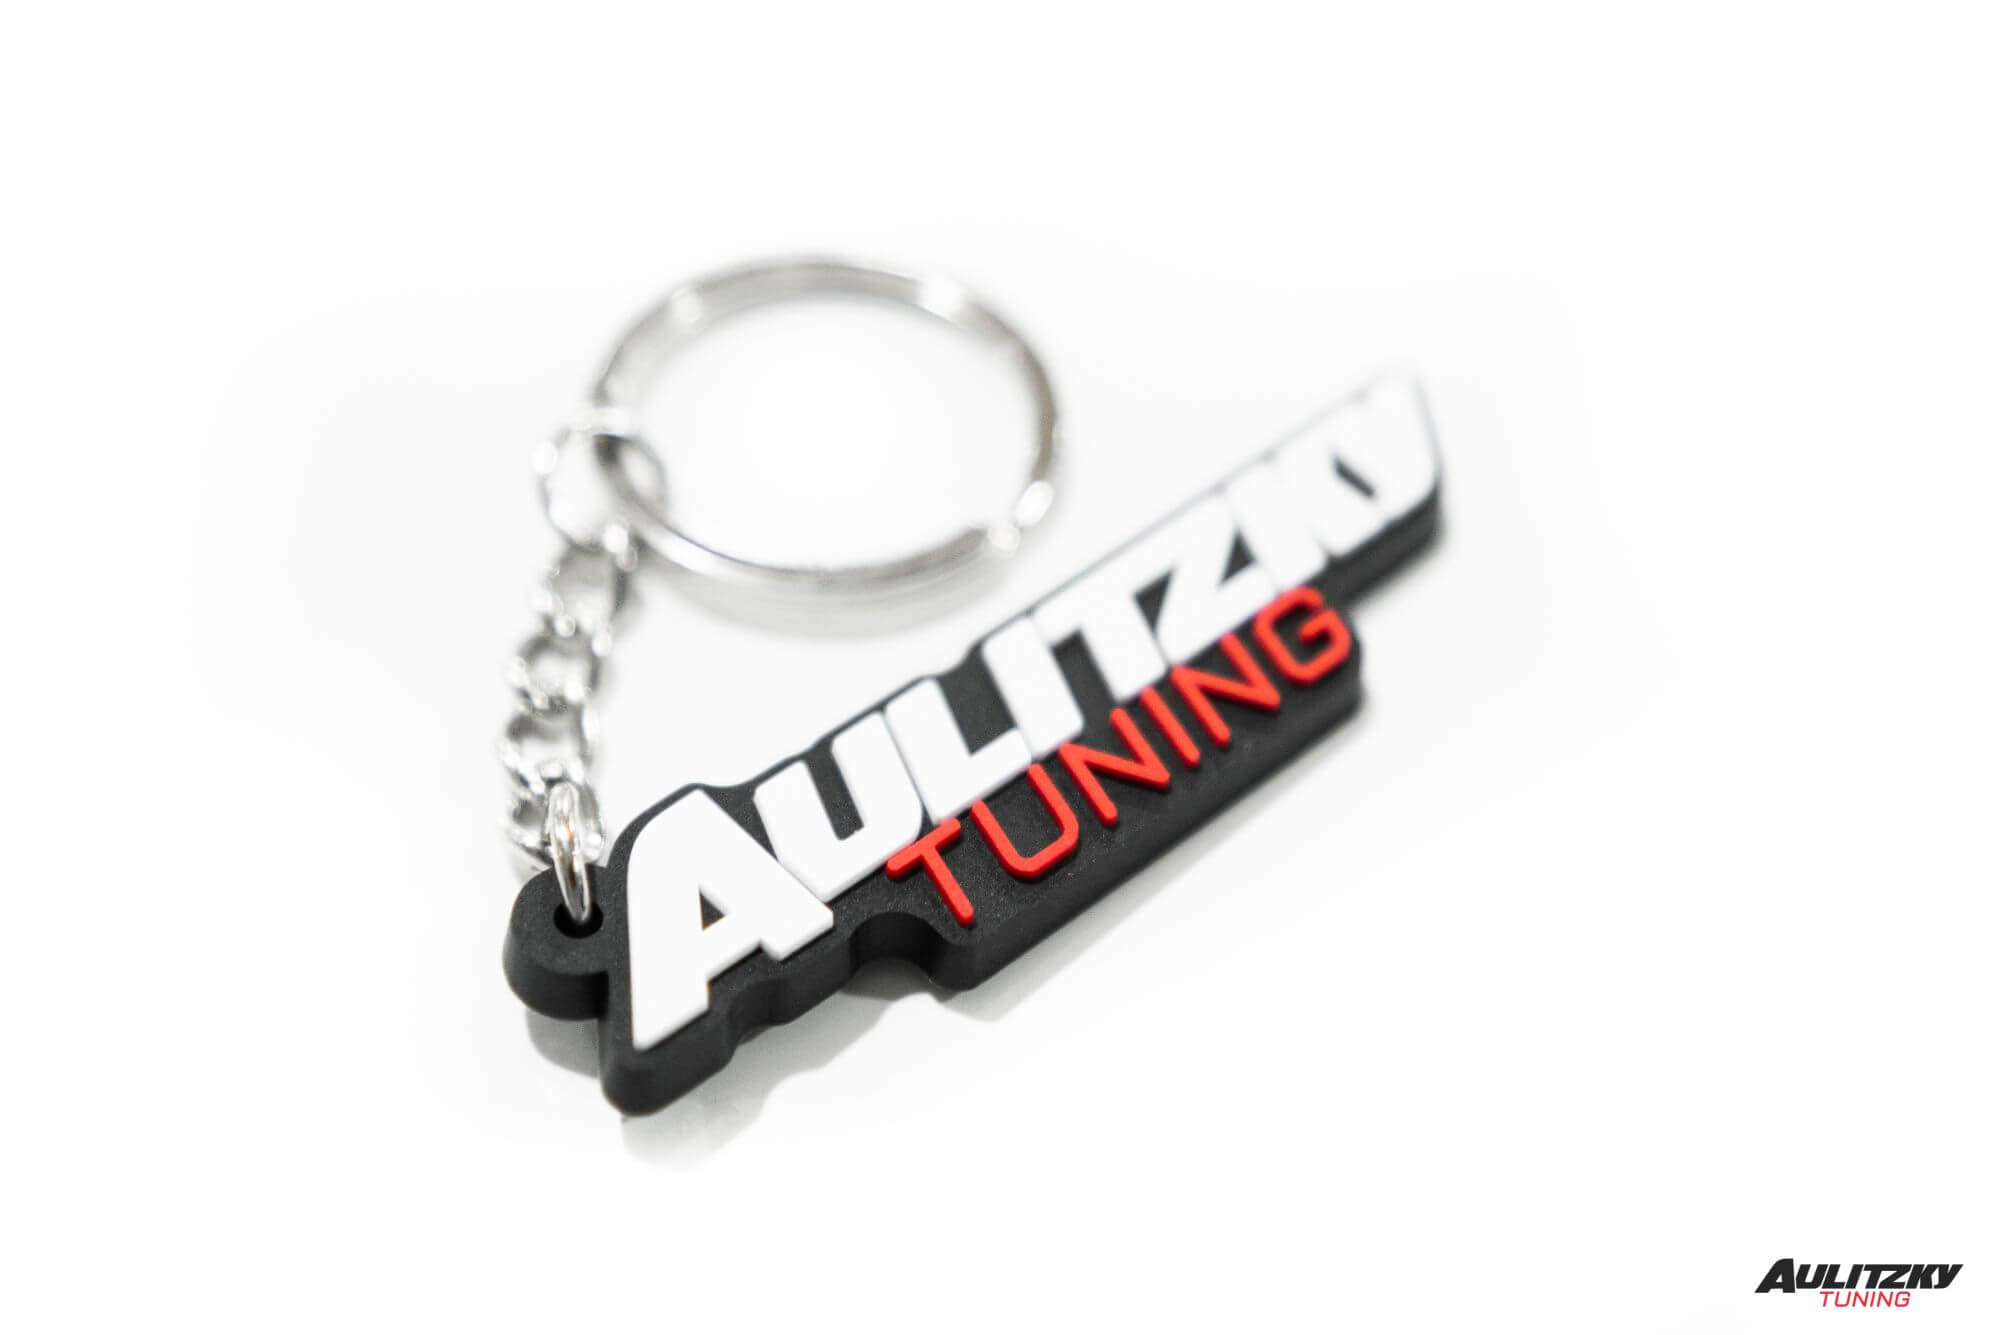 Aulitzky Tuning | Schlüsselanhänger | Aulitzky Tuning Logo | "Aulitzky-Edition"